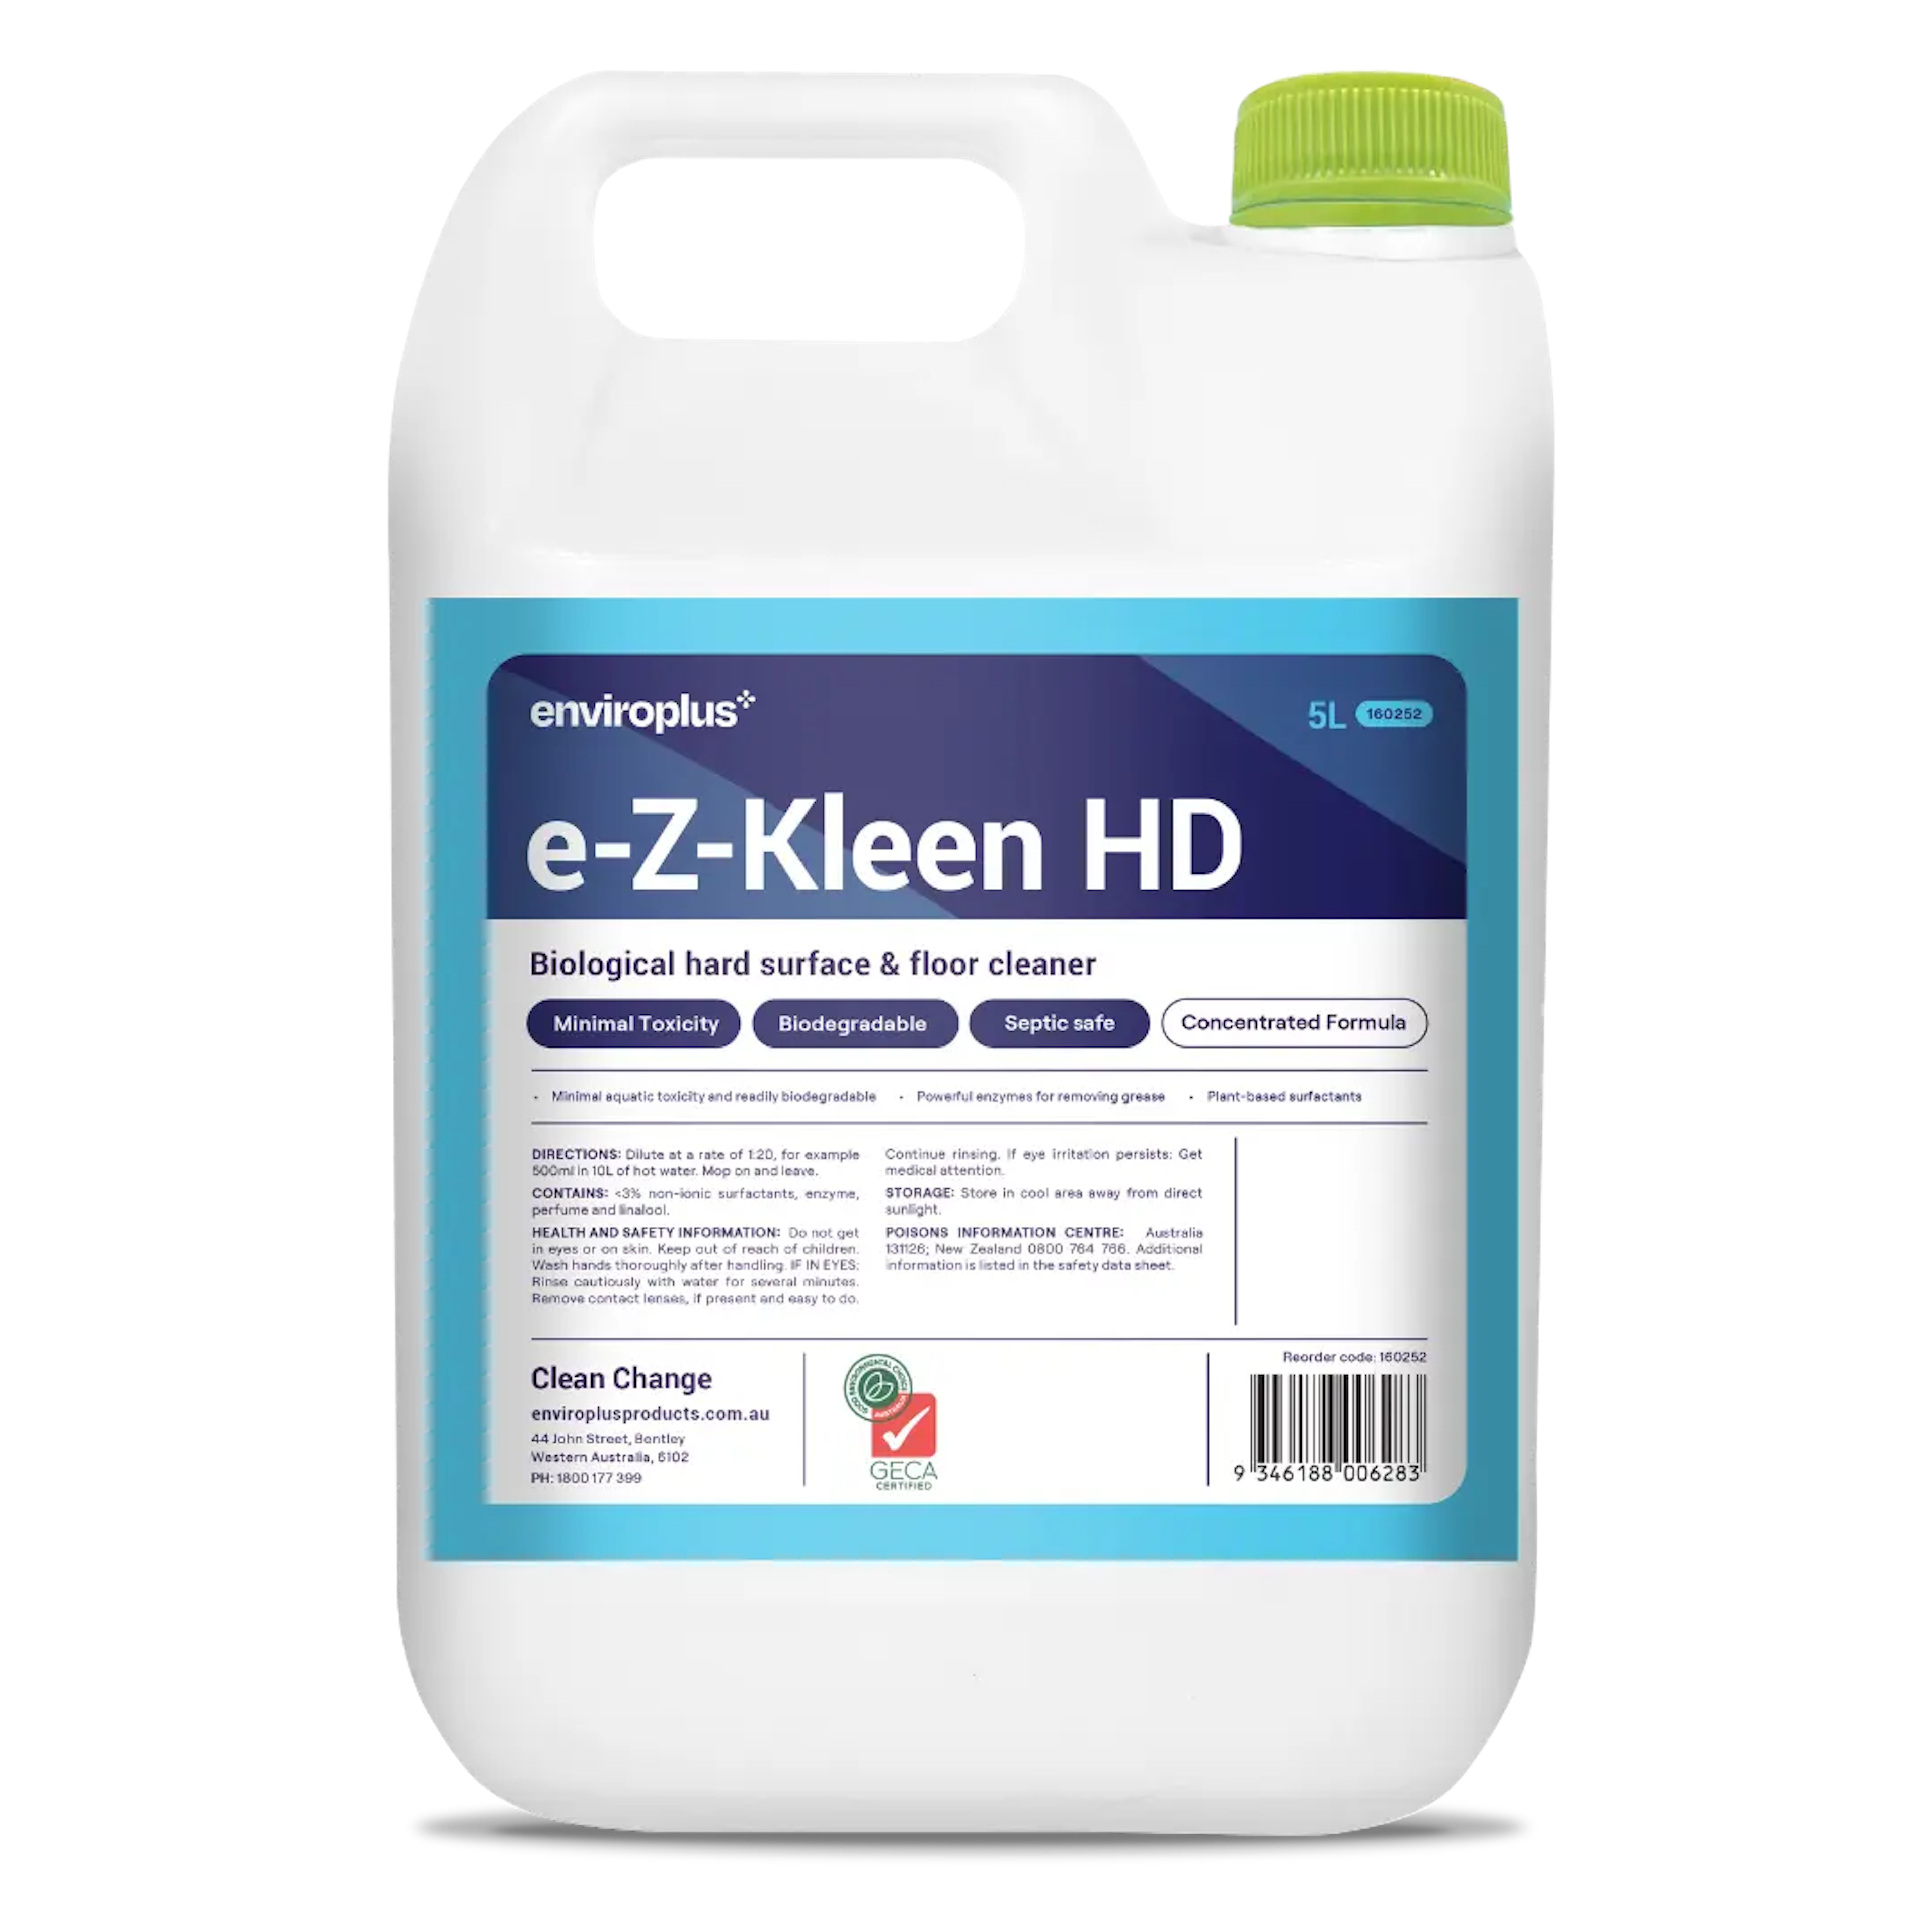 e-Z-Kleen HD